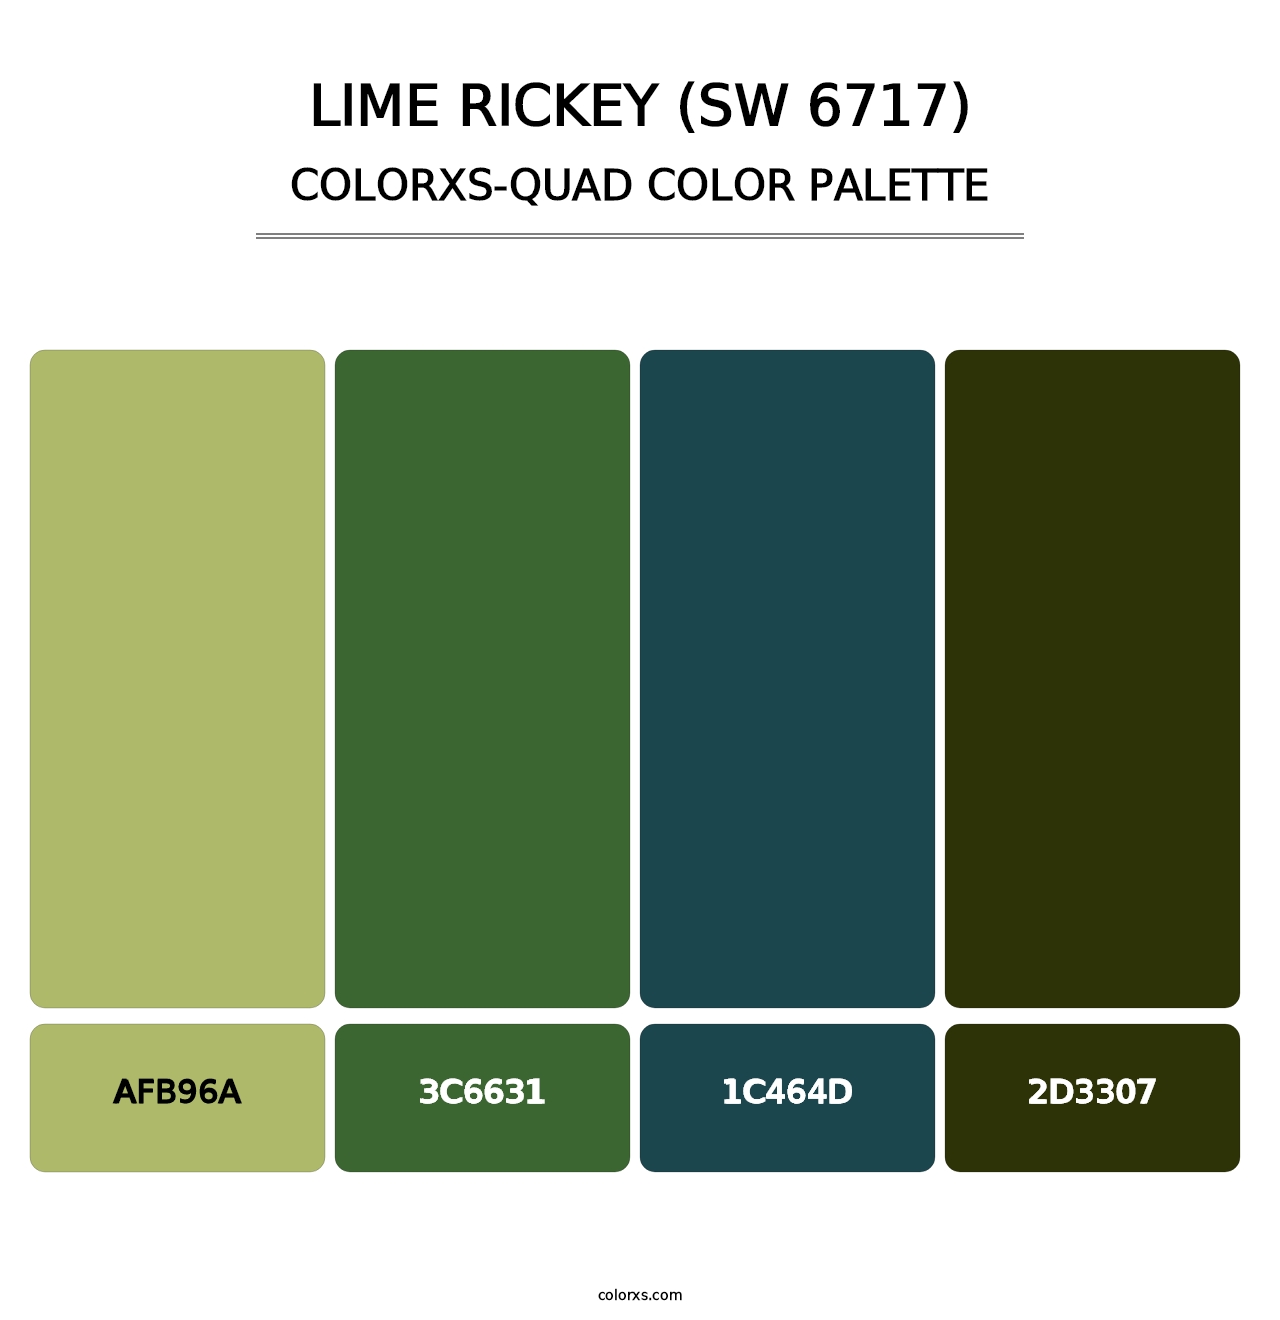 Lime Rickey (SW 6717) - Colorxs Quad Palette